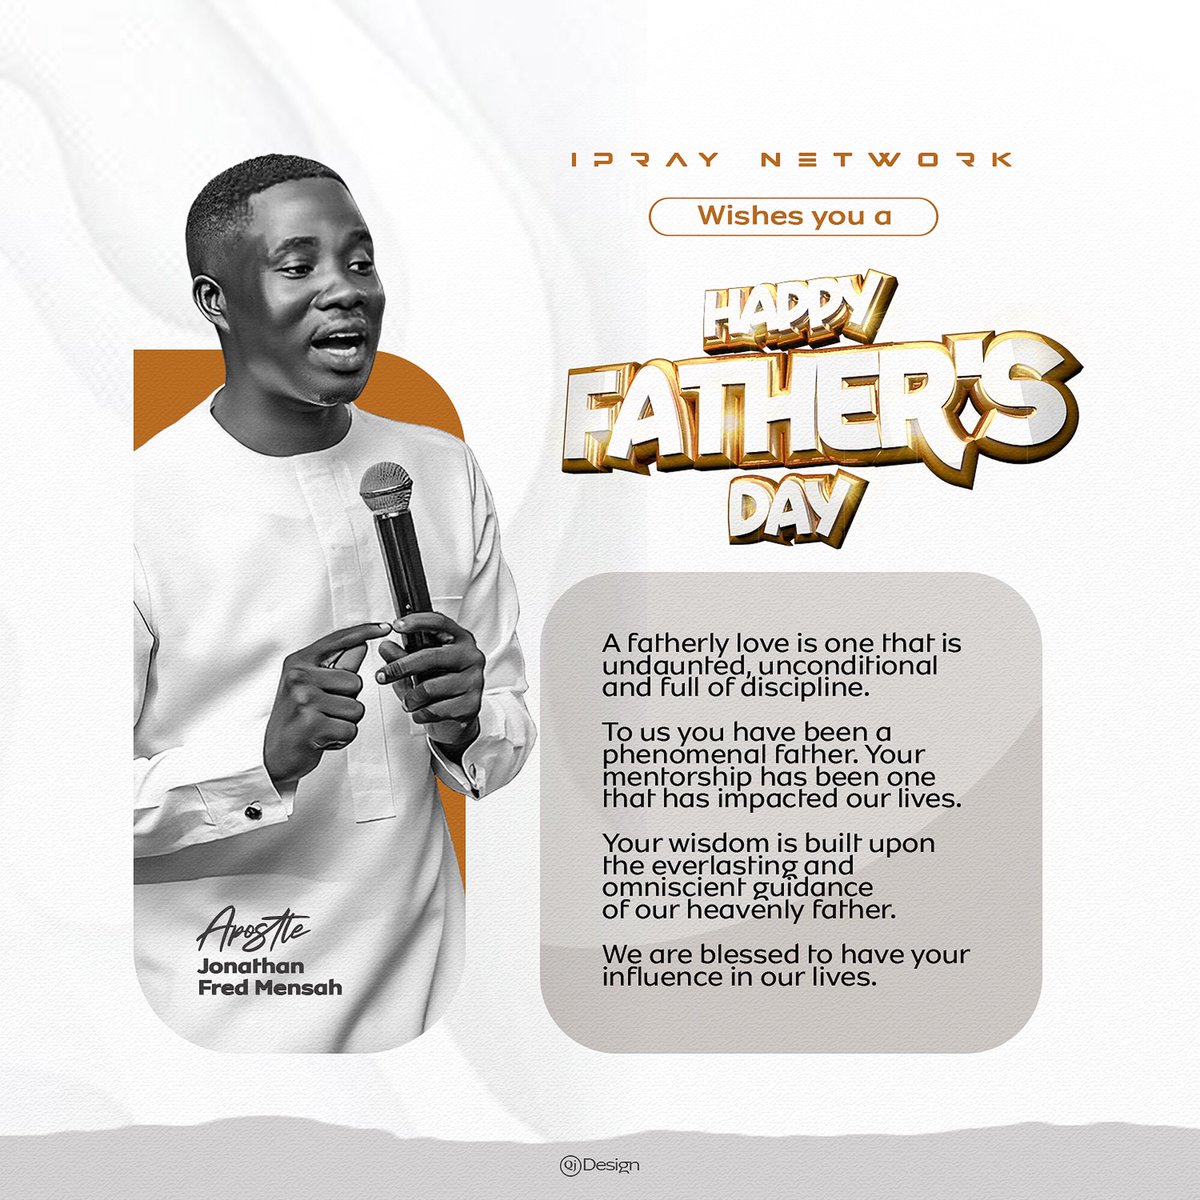 #graphicdesign #fatherhood #fathersdaycelebration #cinema4d #flyerdesign #ghanadesigners #churchposter #churchflyers #happyfathersday #photoshopdesign #wednesday #wednesdaypost